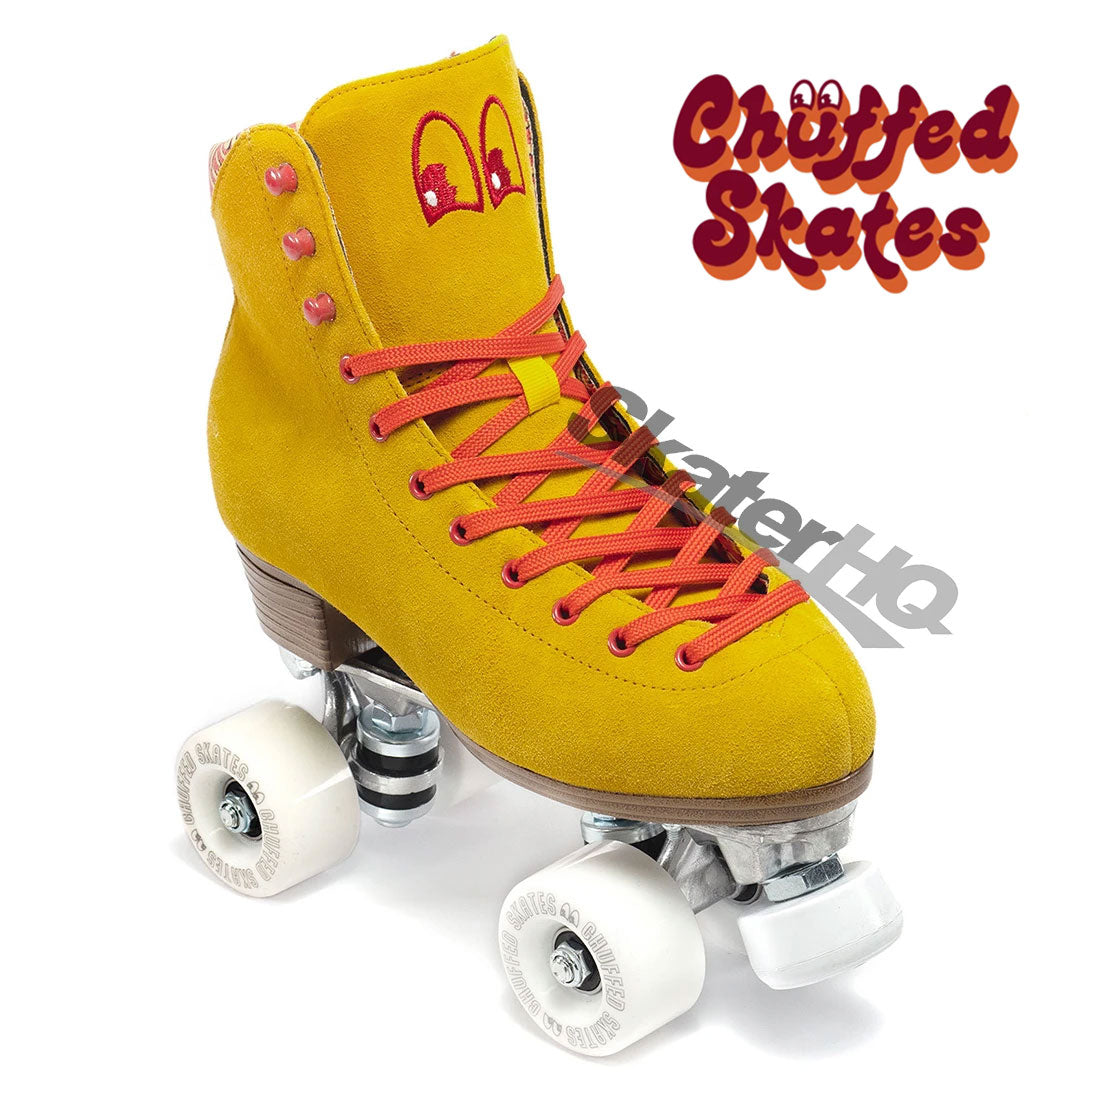 Chuffed Crew Birak Mustard 7US Roller Skates